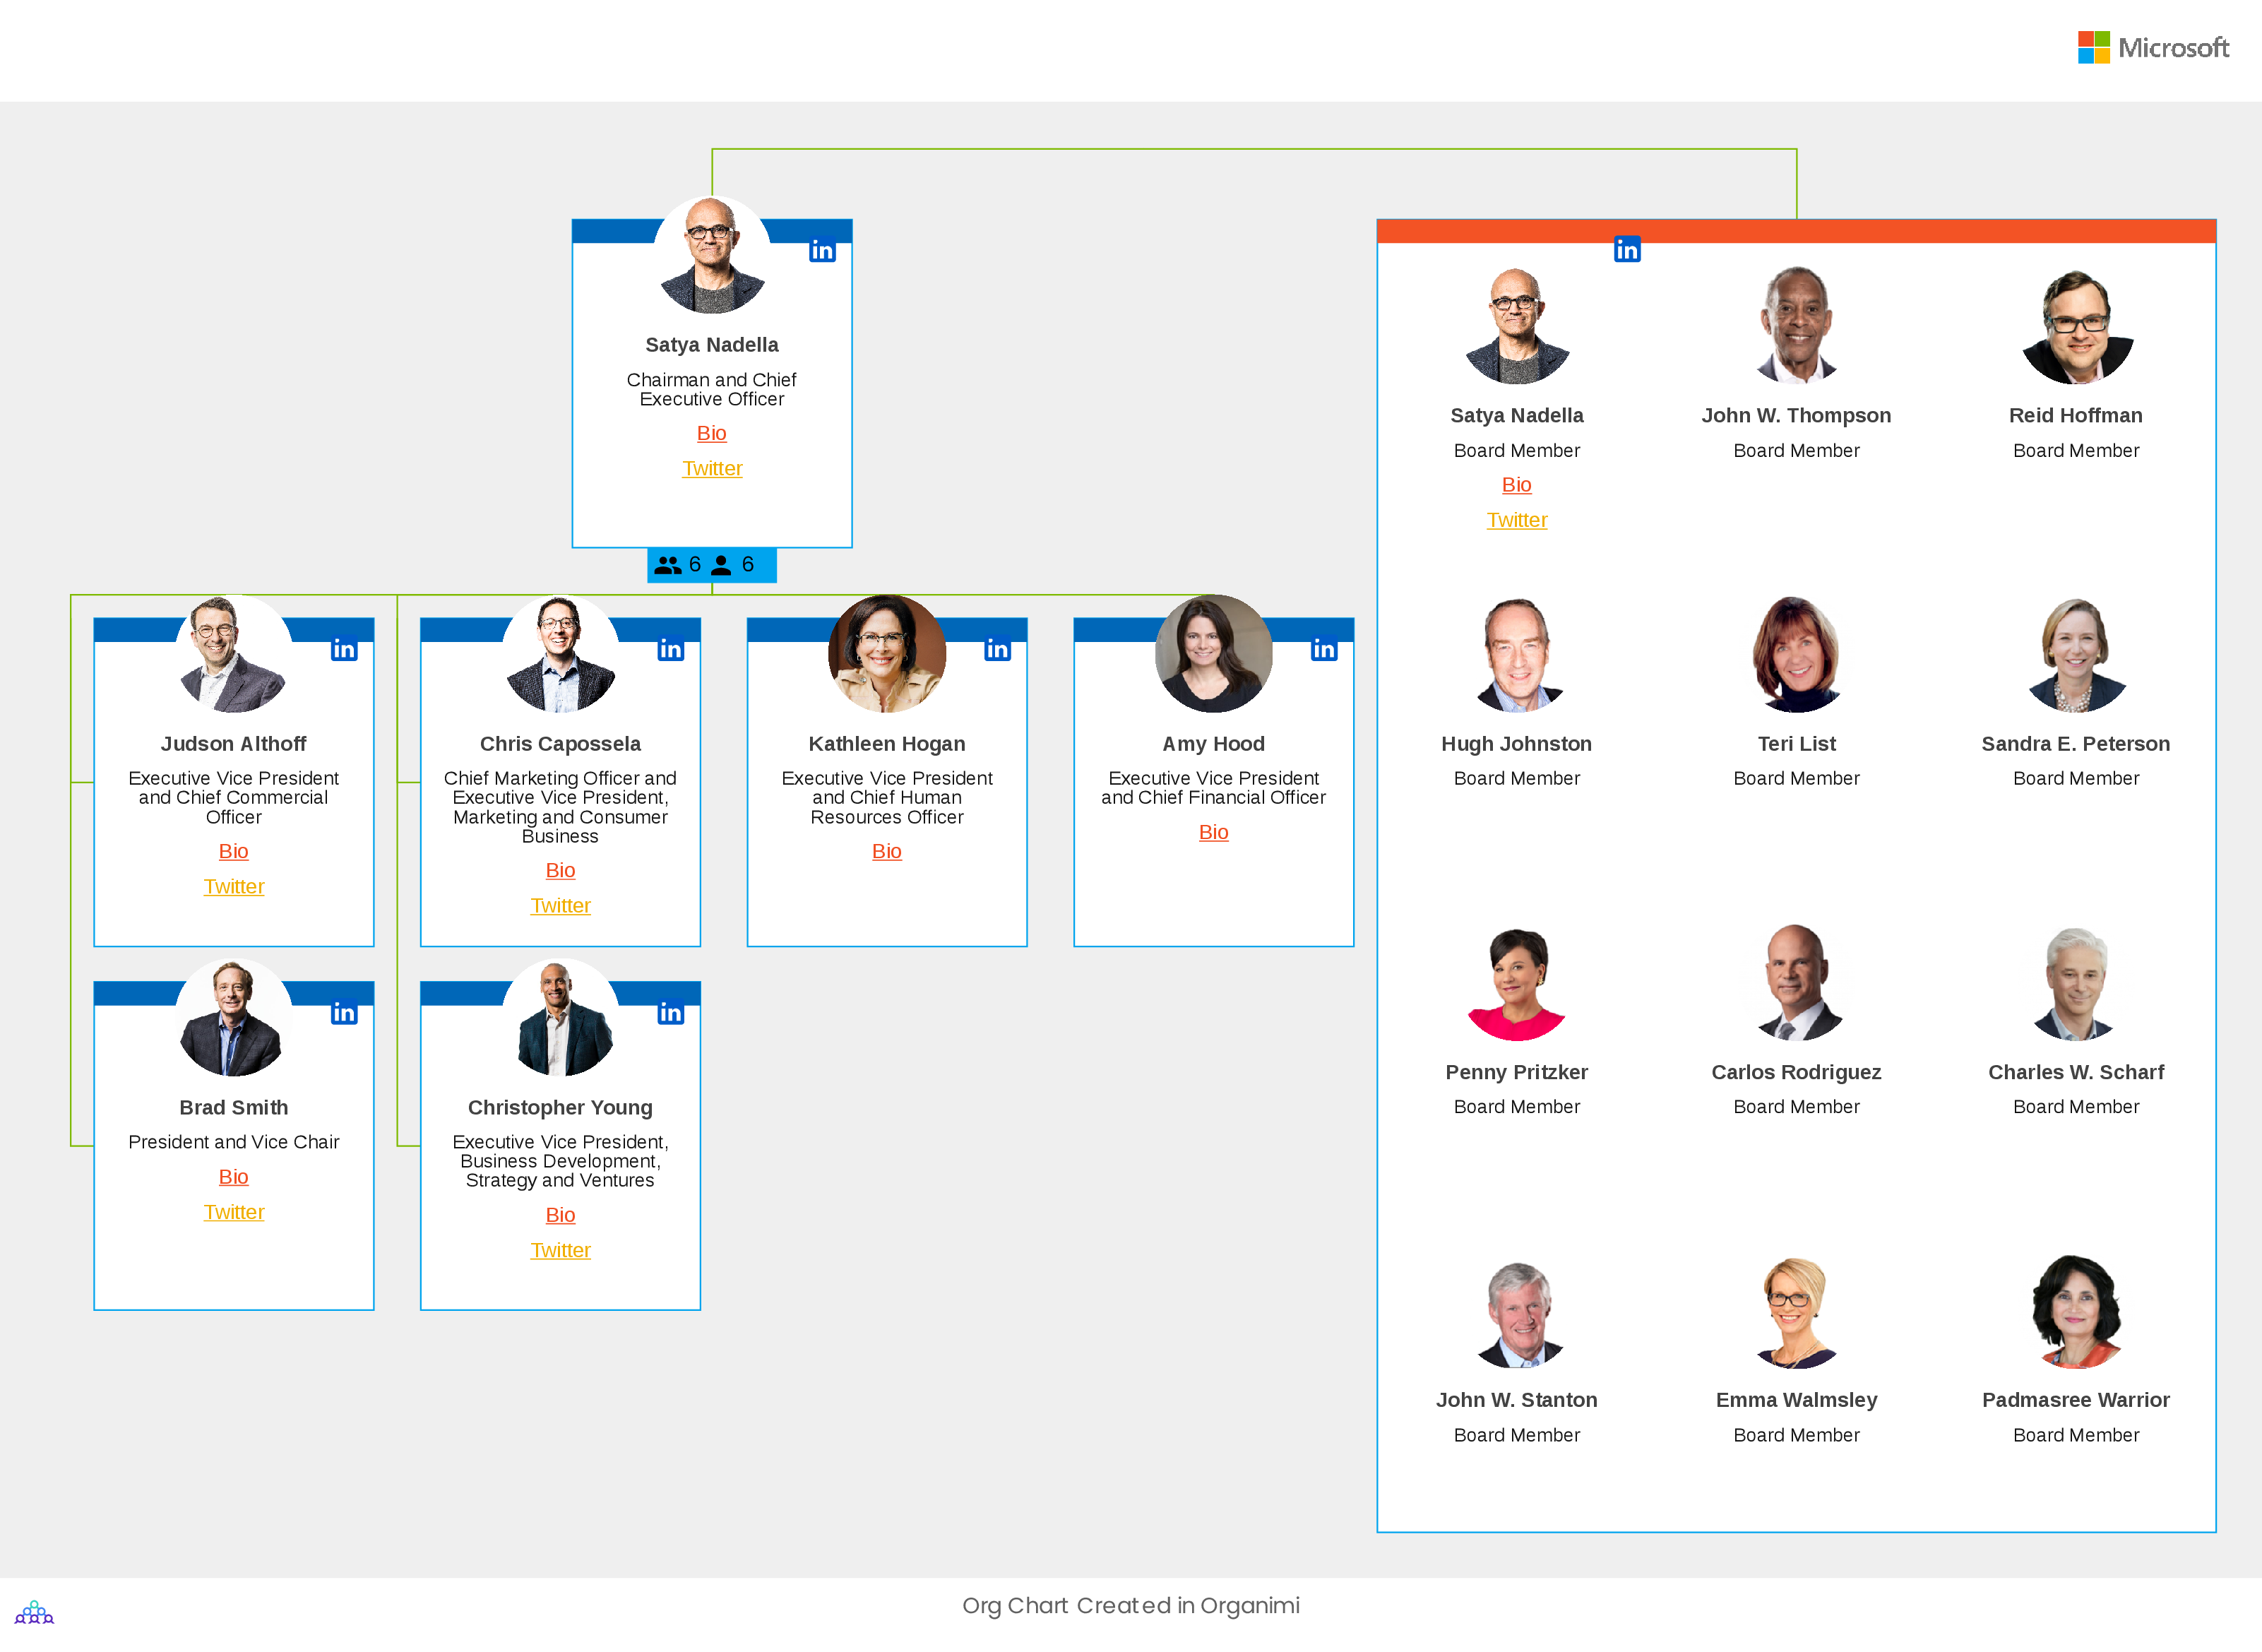 Microsoft's Corporate Organizational Structure